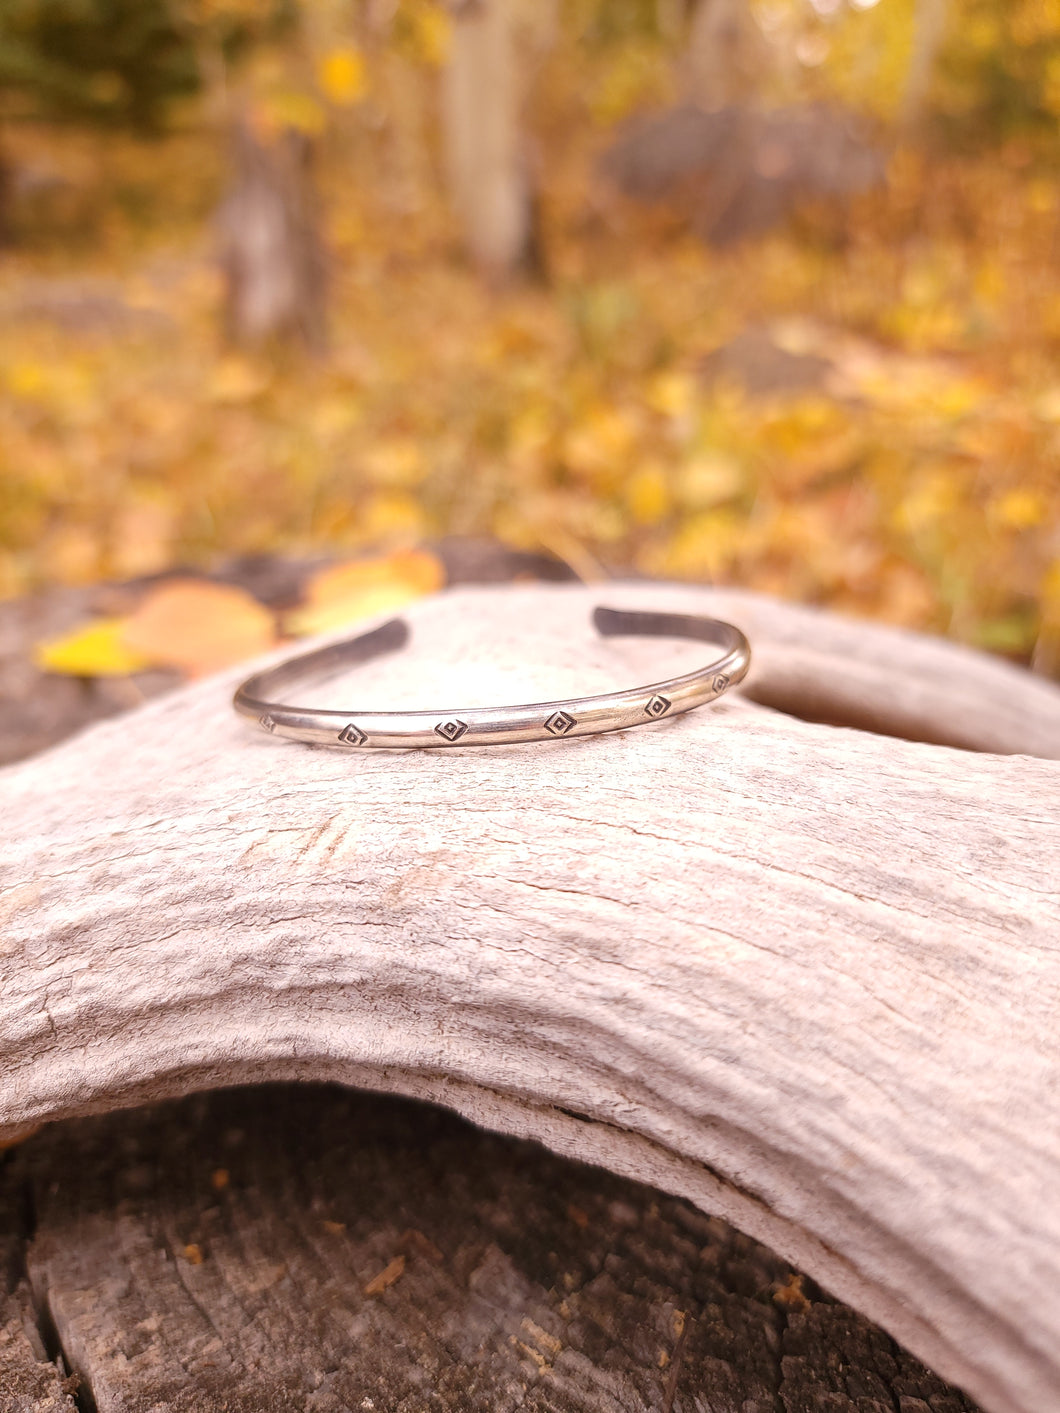 Patagonia Silver Bracelet